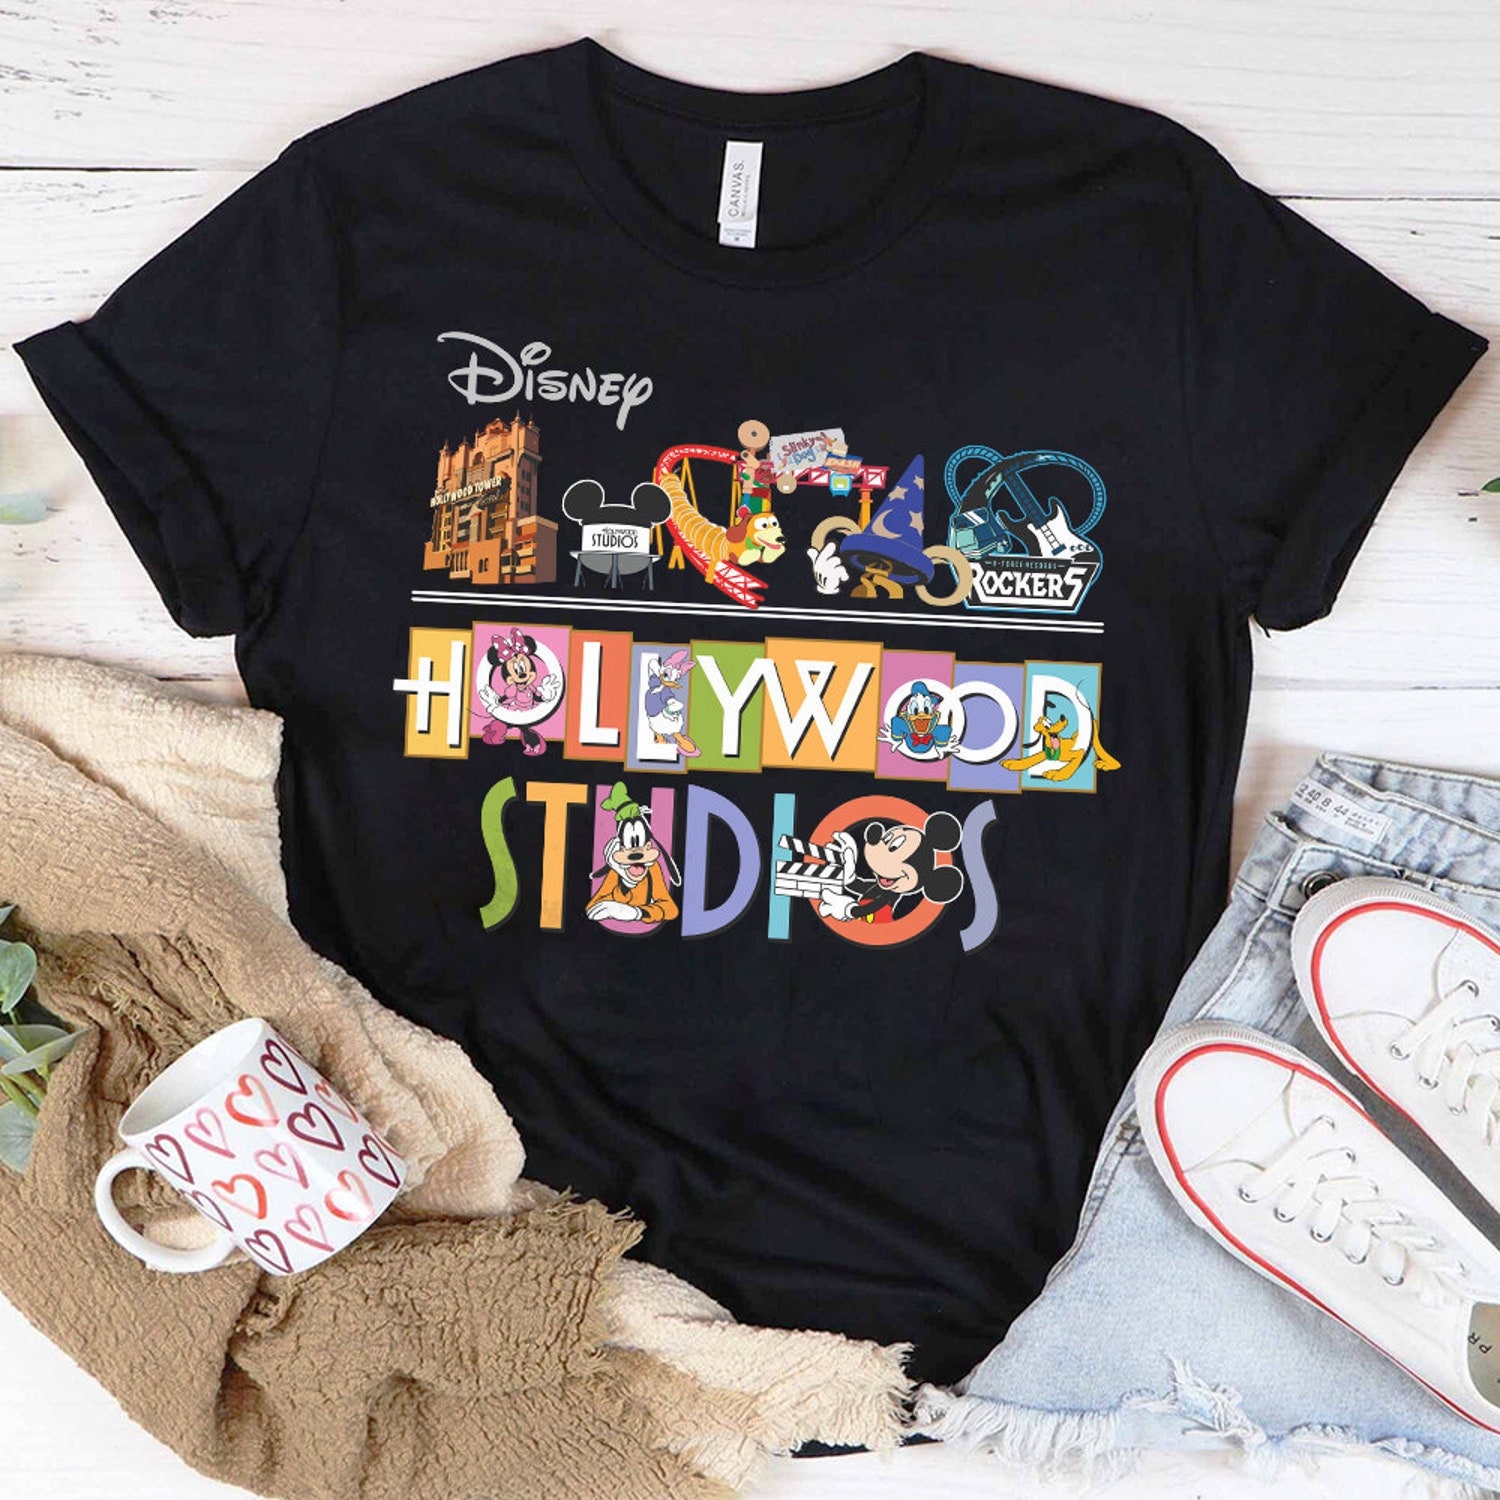 Disney Hollywood Studio Shirt, Universal Studio Shirt, Disney Group Matching